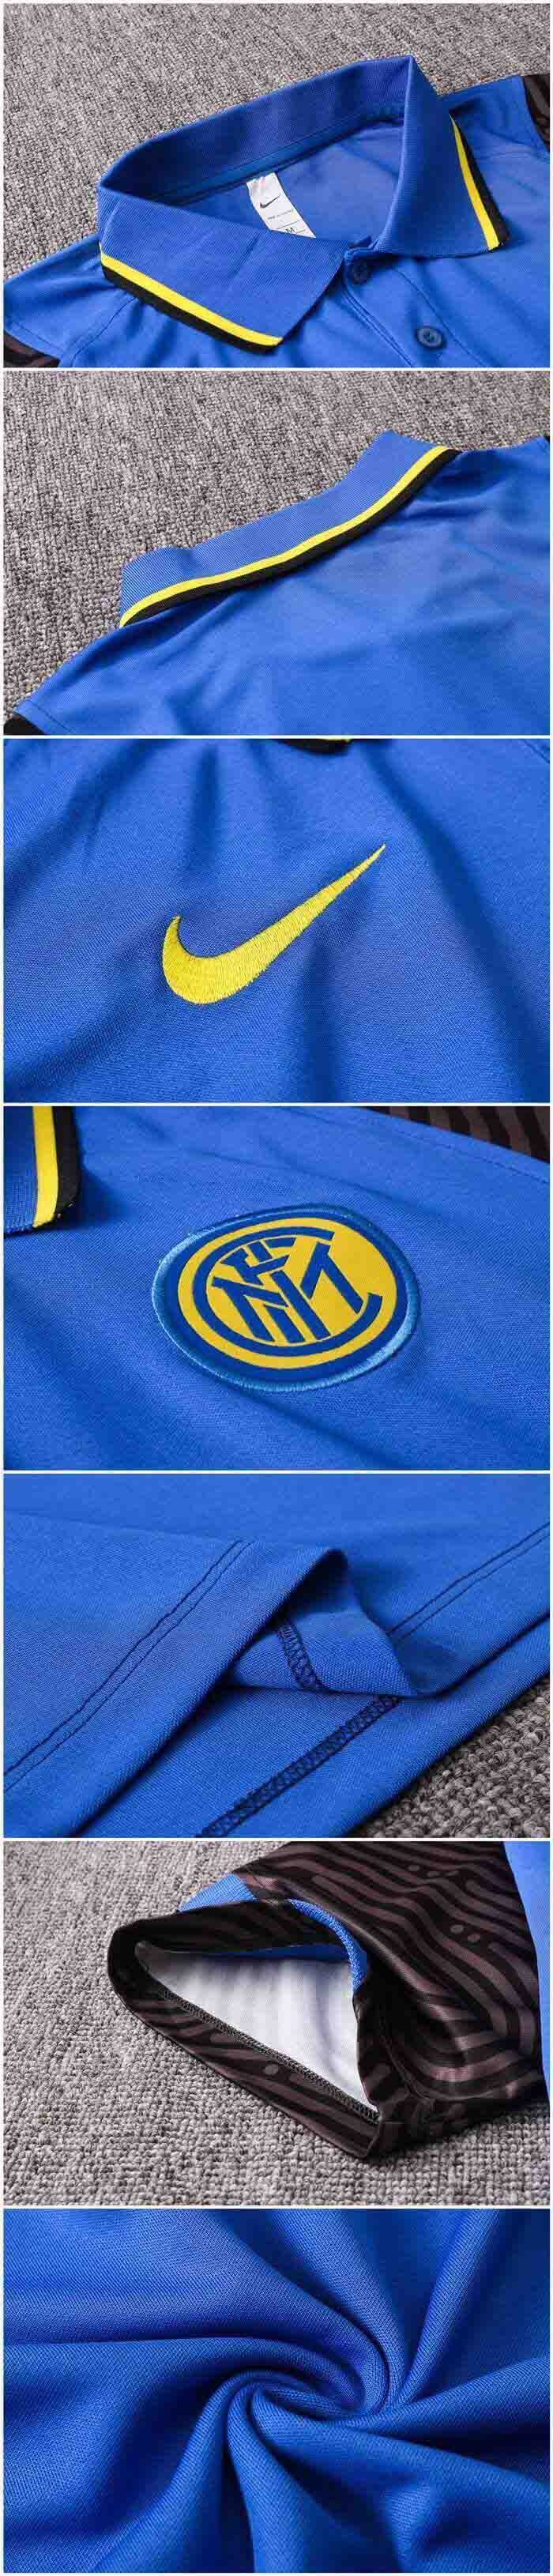 20/21 Inter Milan Blue Grand Slam Polo T-Shirt